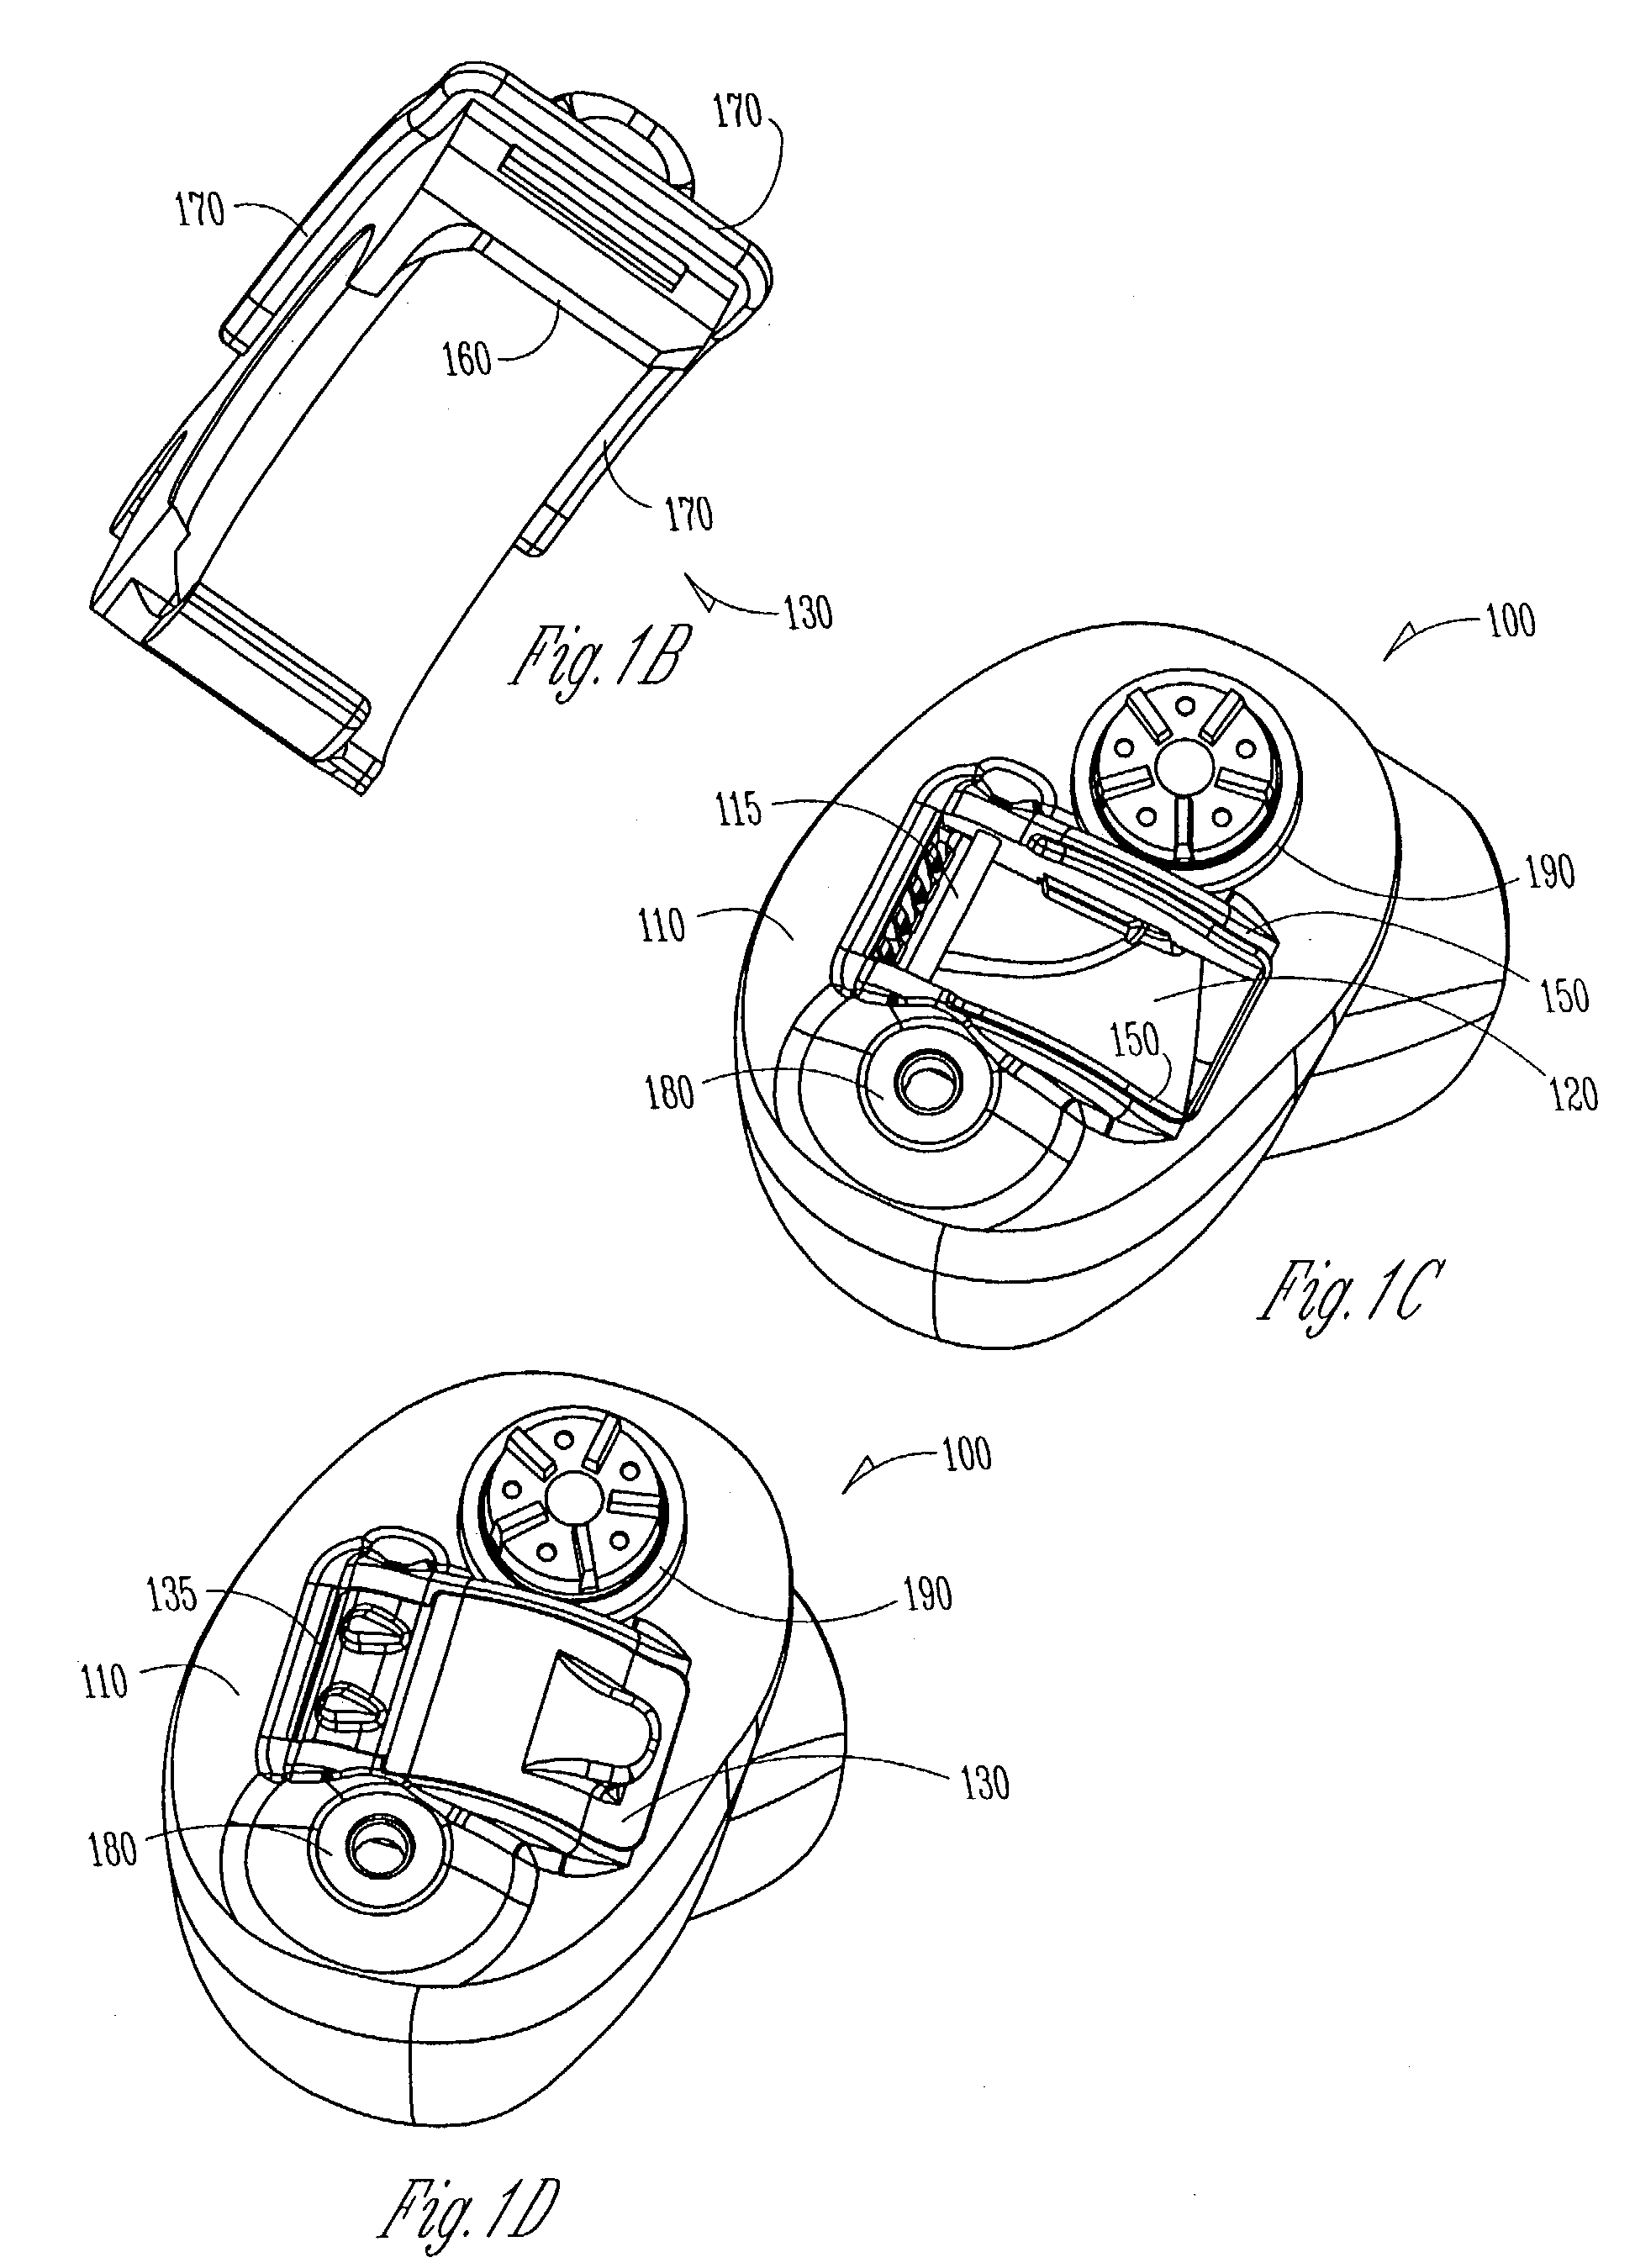 Hearing aid battery door seal